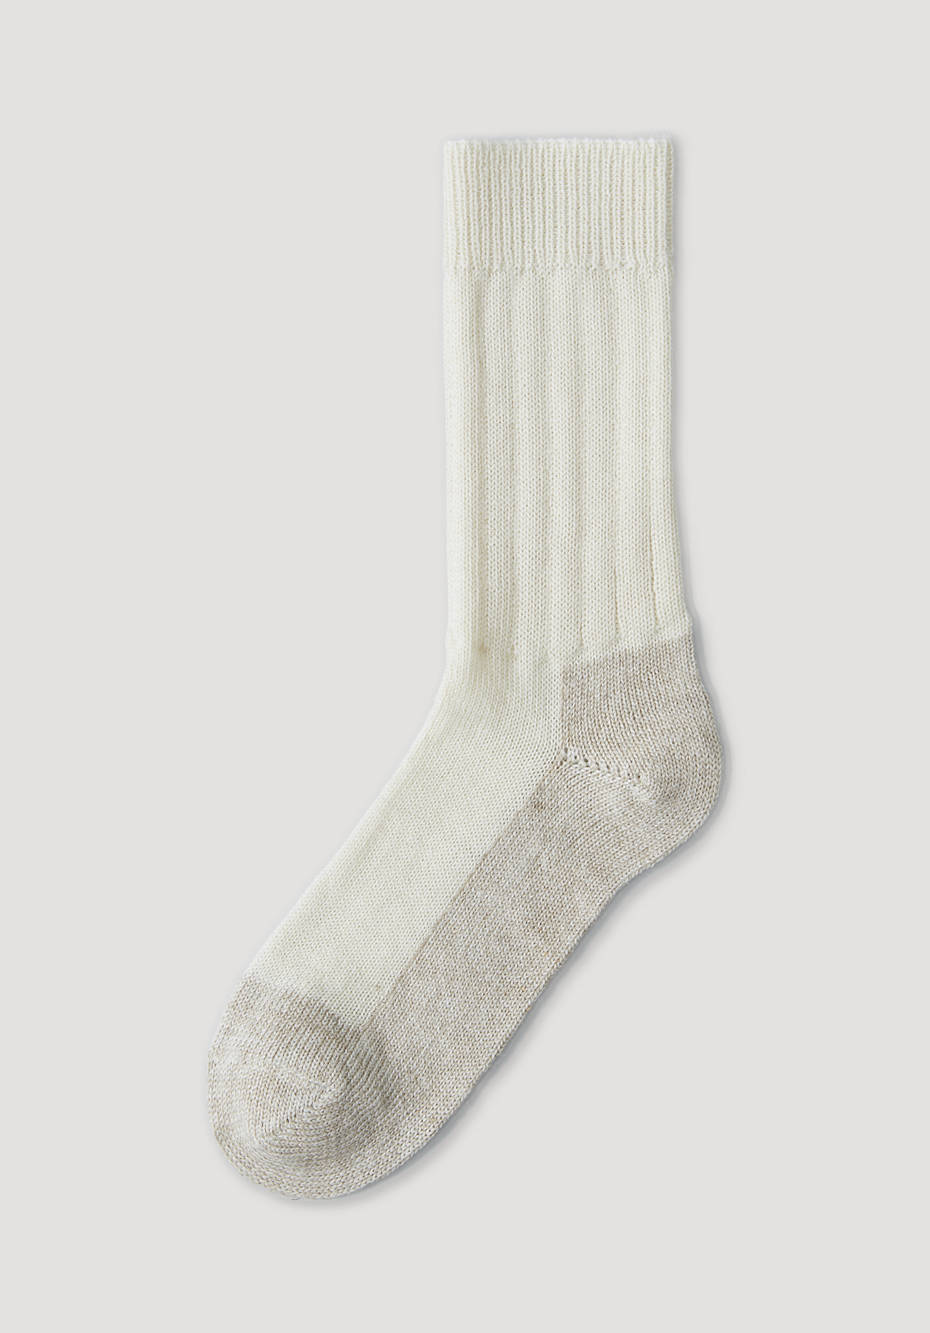 Functional socks made from organic merino wool with hemp